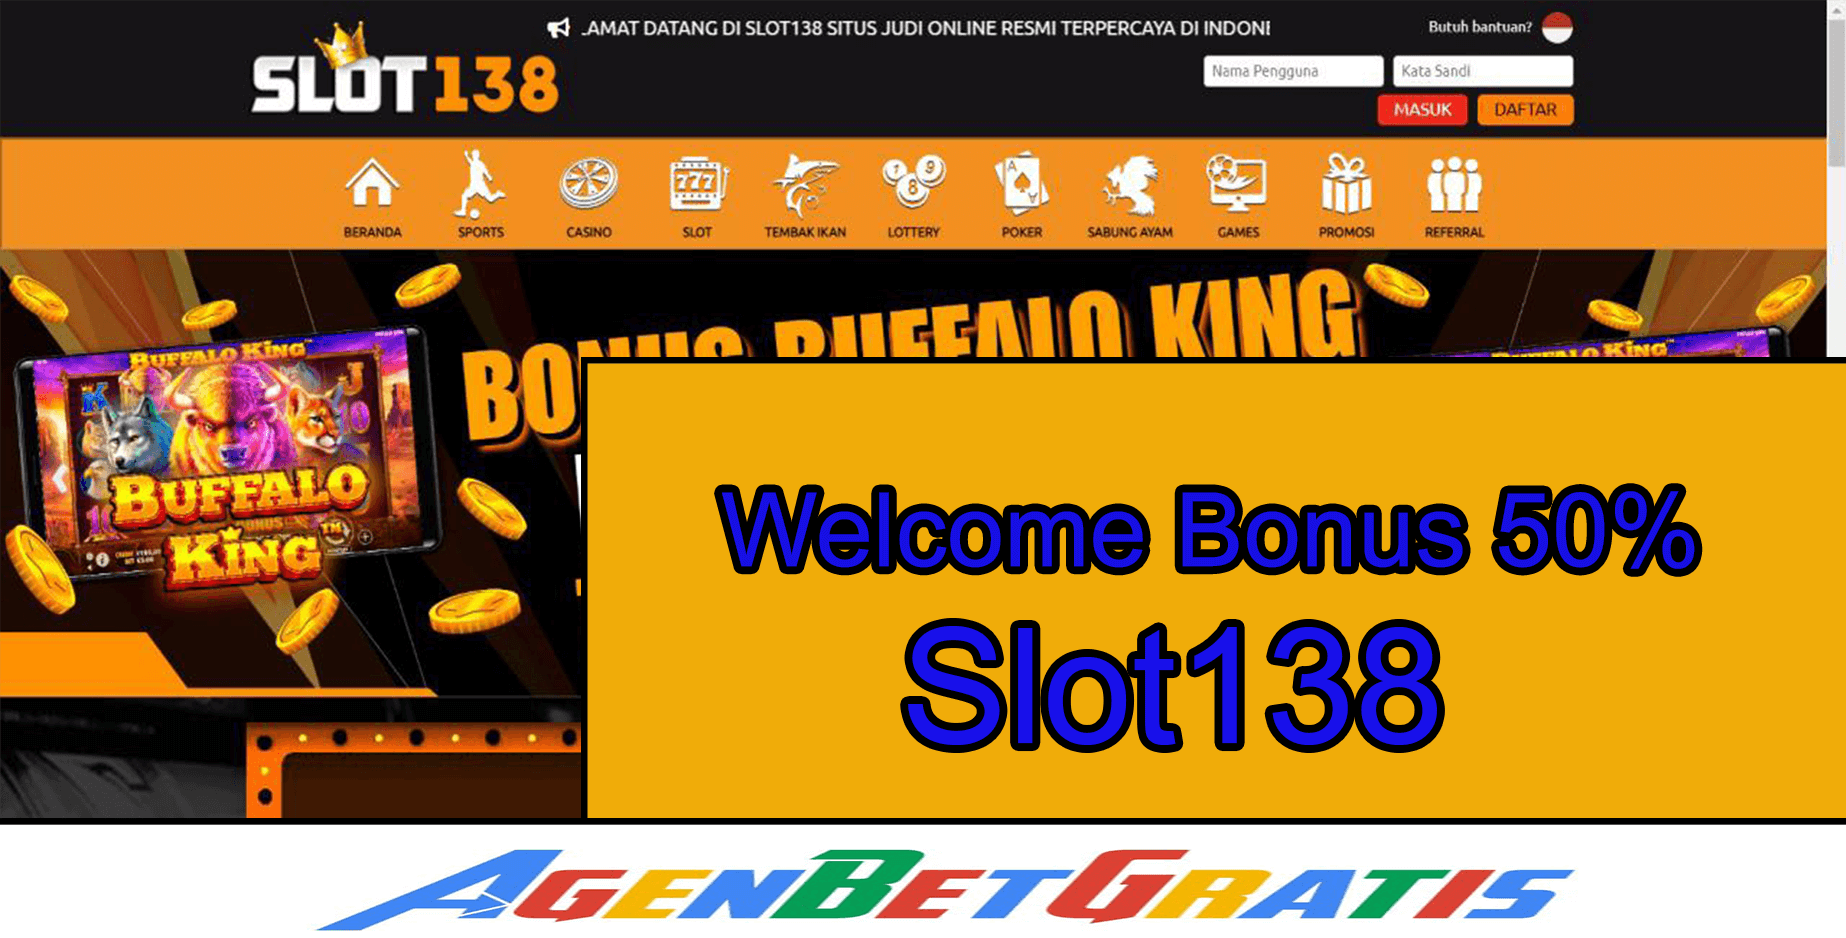 SLOT138 - Welcome Bonus 50%